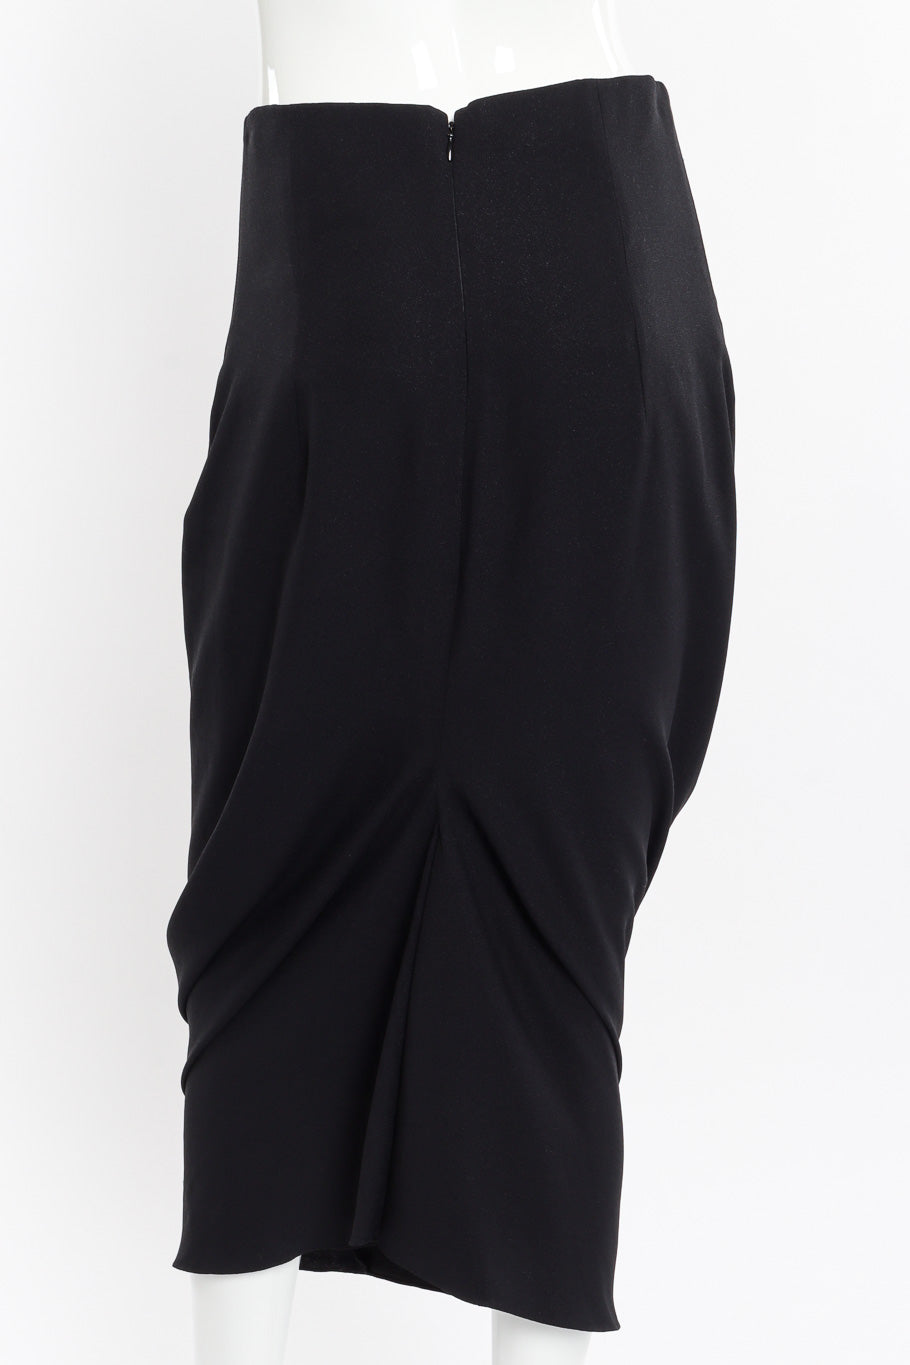 Vintage John Galliano 1999 S/S Draped Skirt back on mannequin closeup @recessla